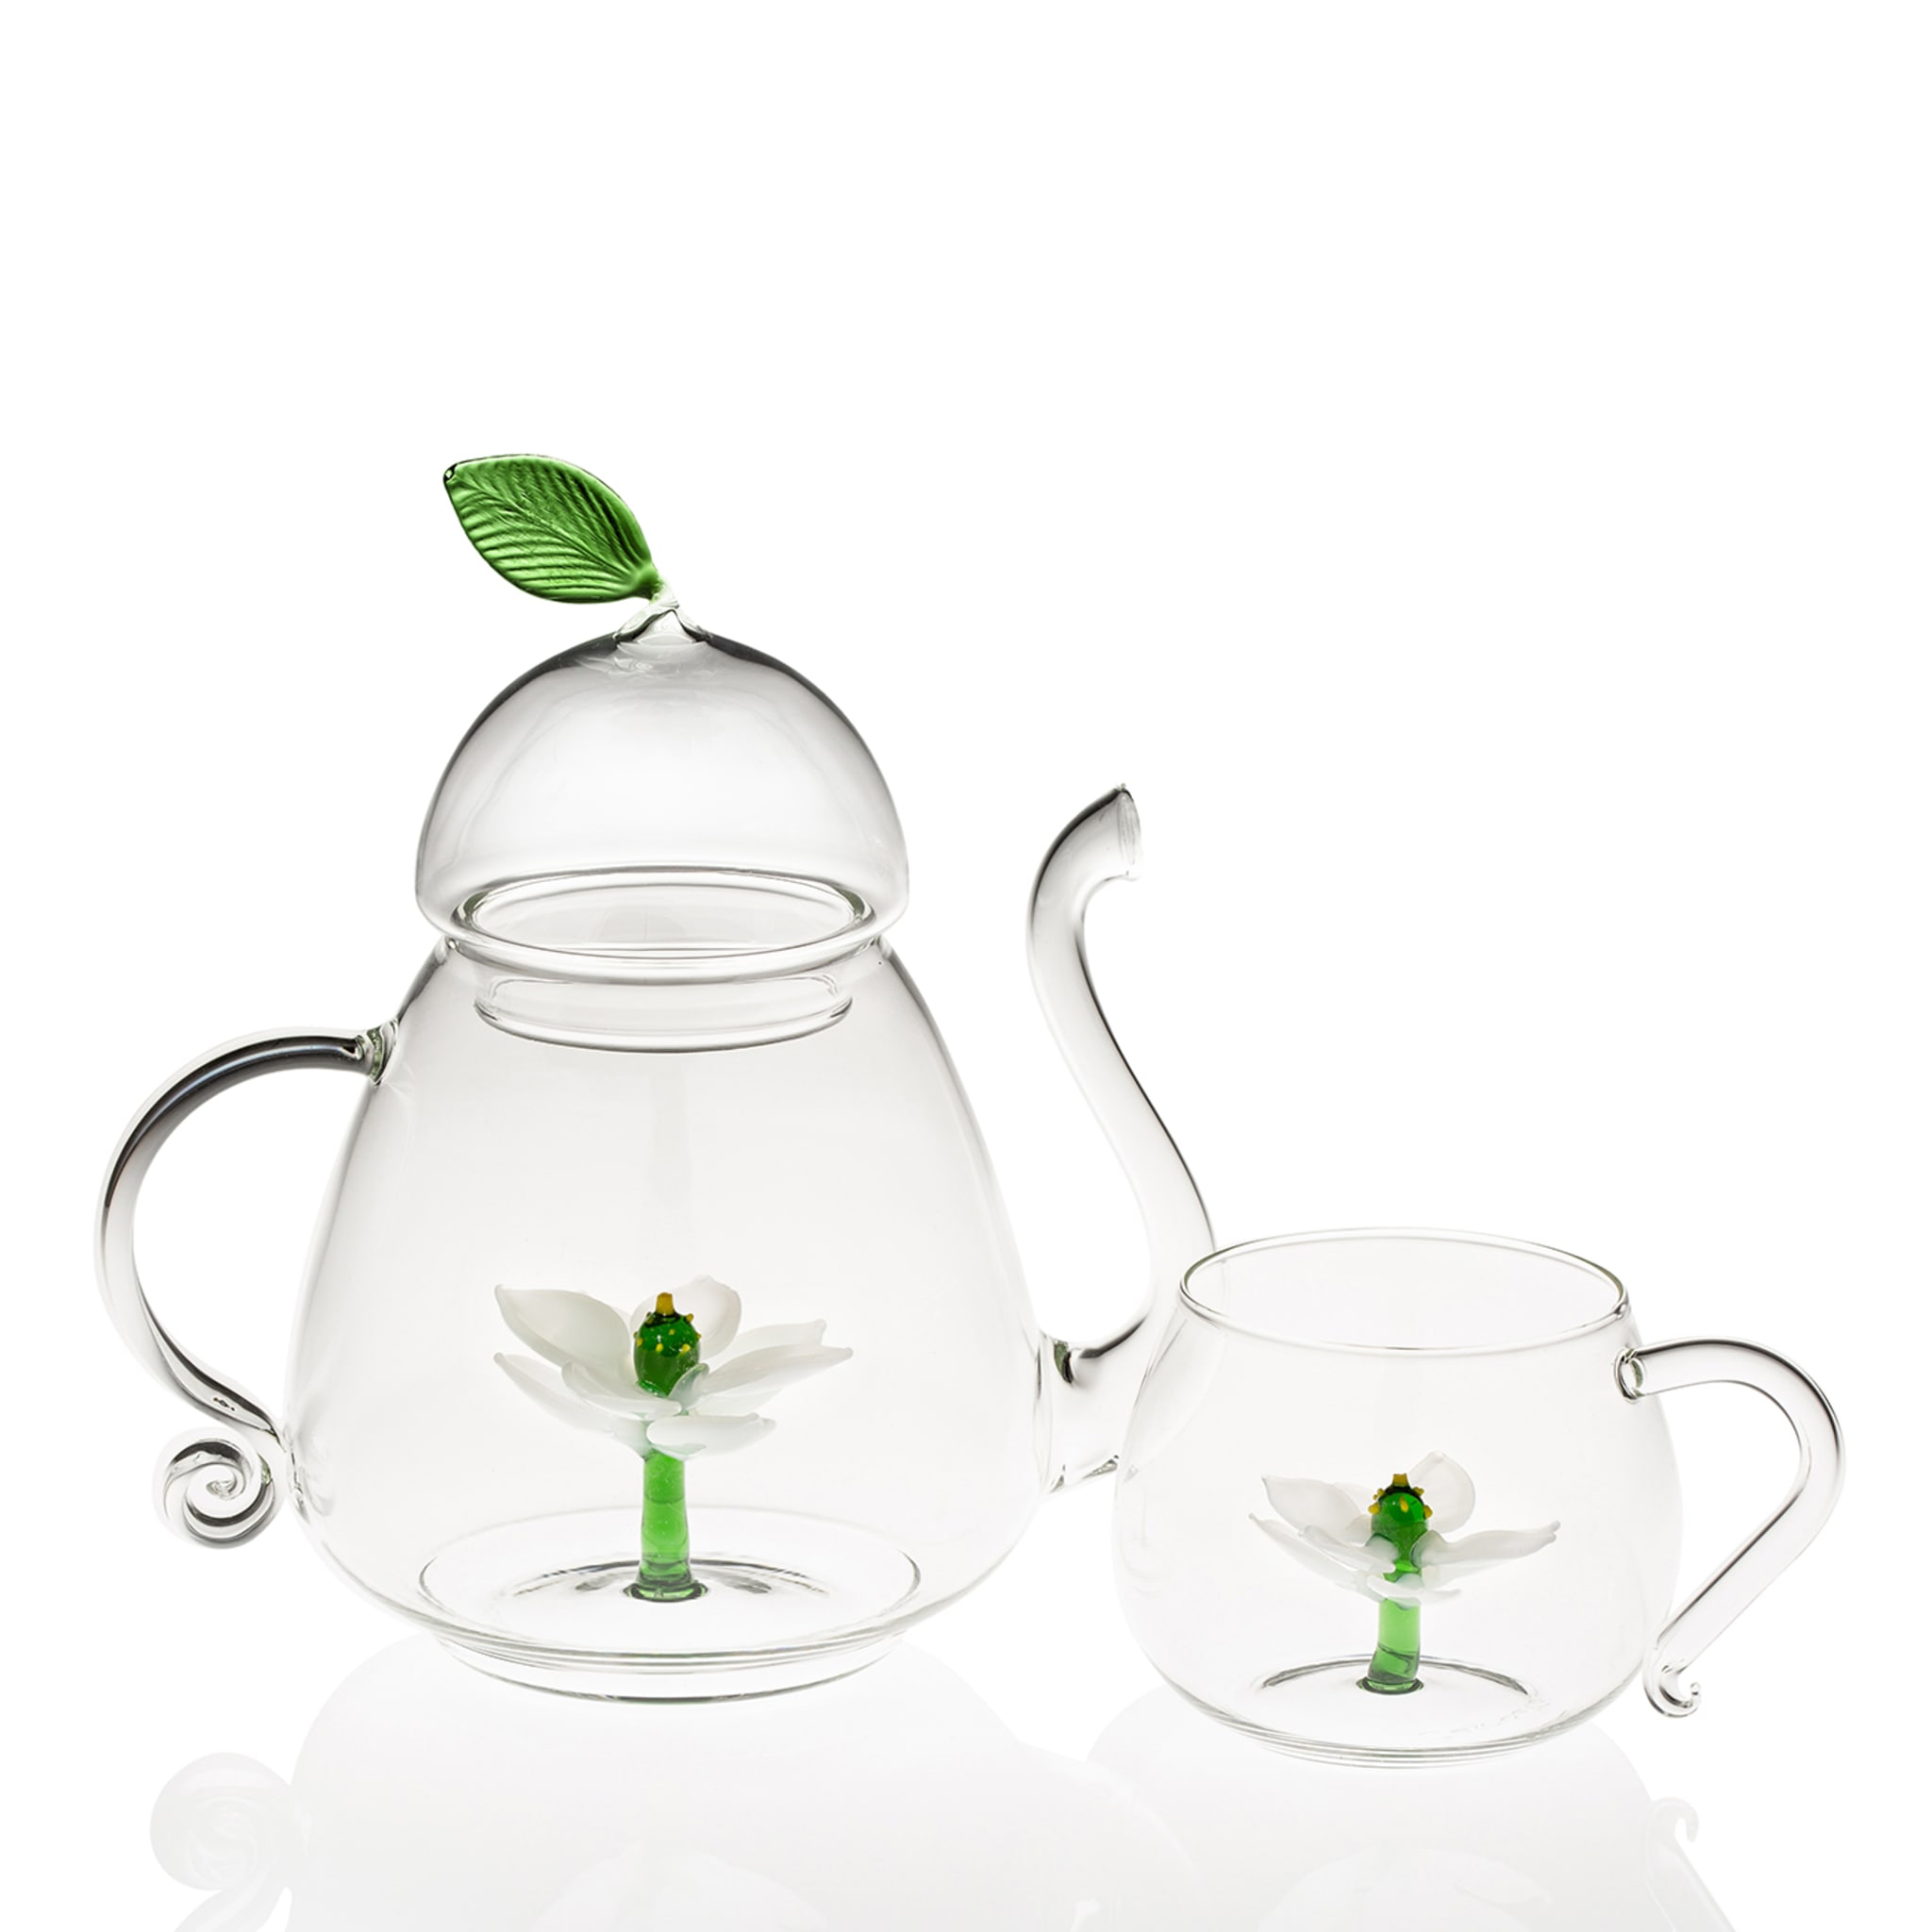 Lotus Teapot - Alternative view 1